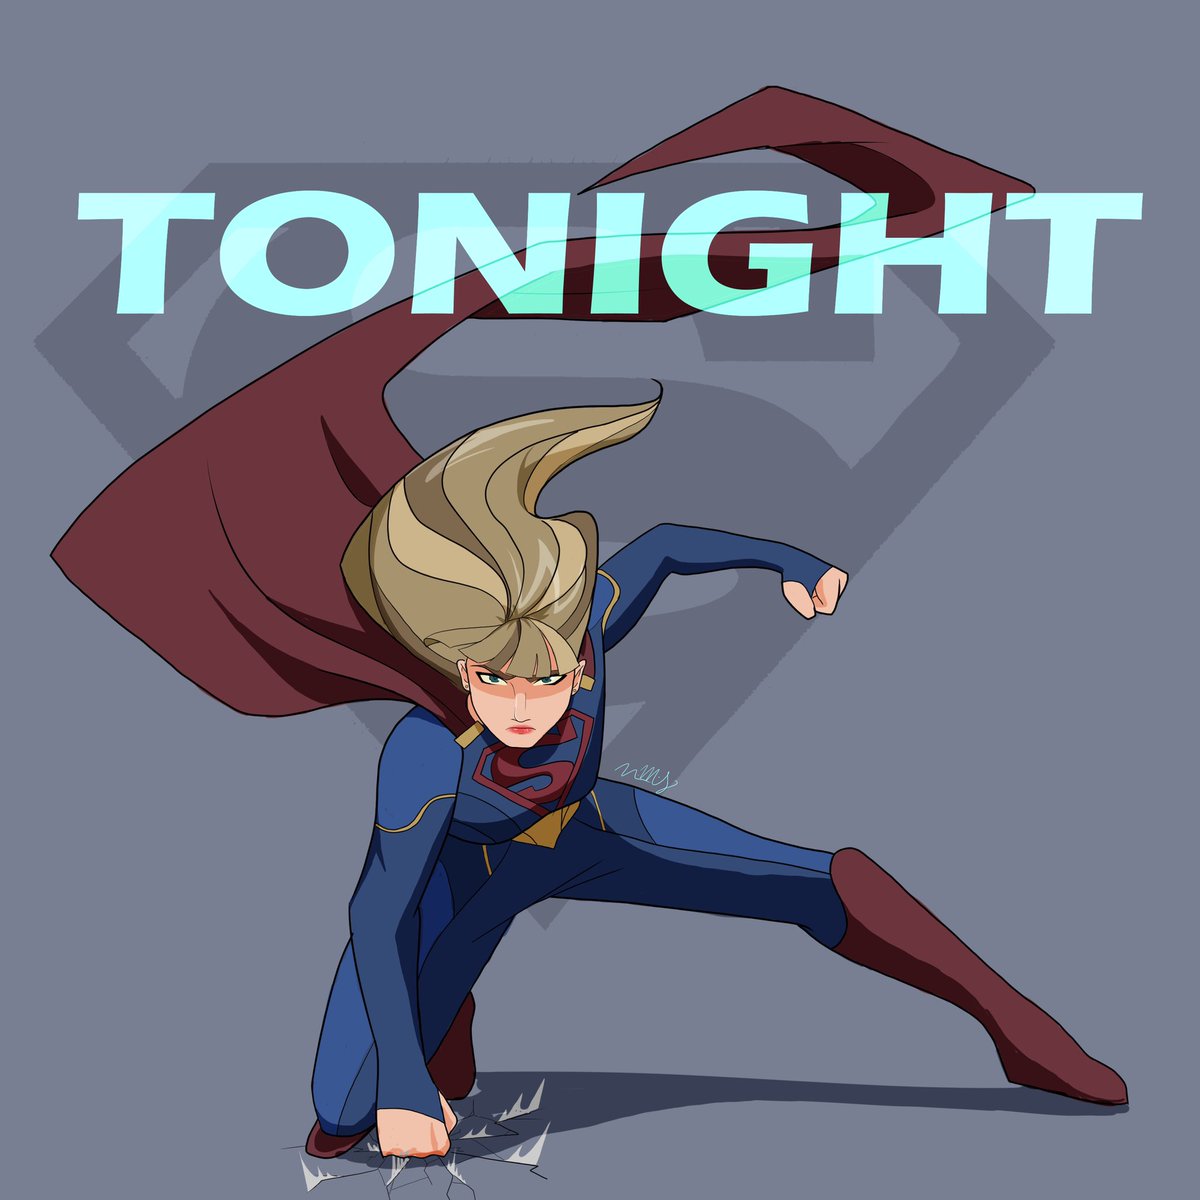 She’s baaaaaaack! 

East coast, the season six premiere of @TheCWSupergirl starts RIGHT NOW! 
#supergirl #karadanvers #karazorel